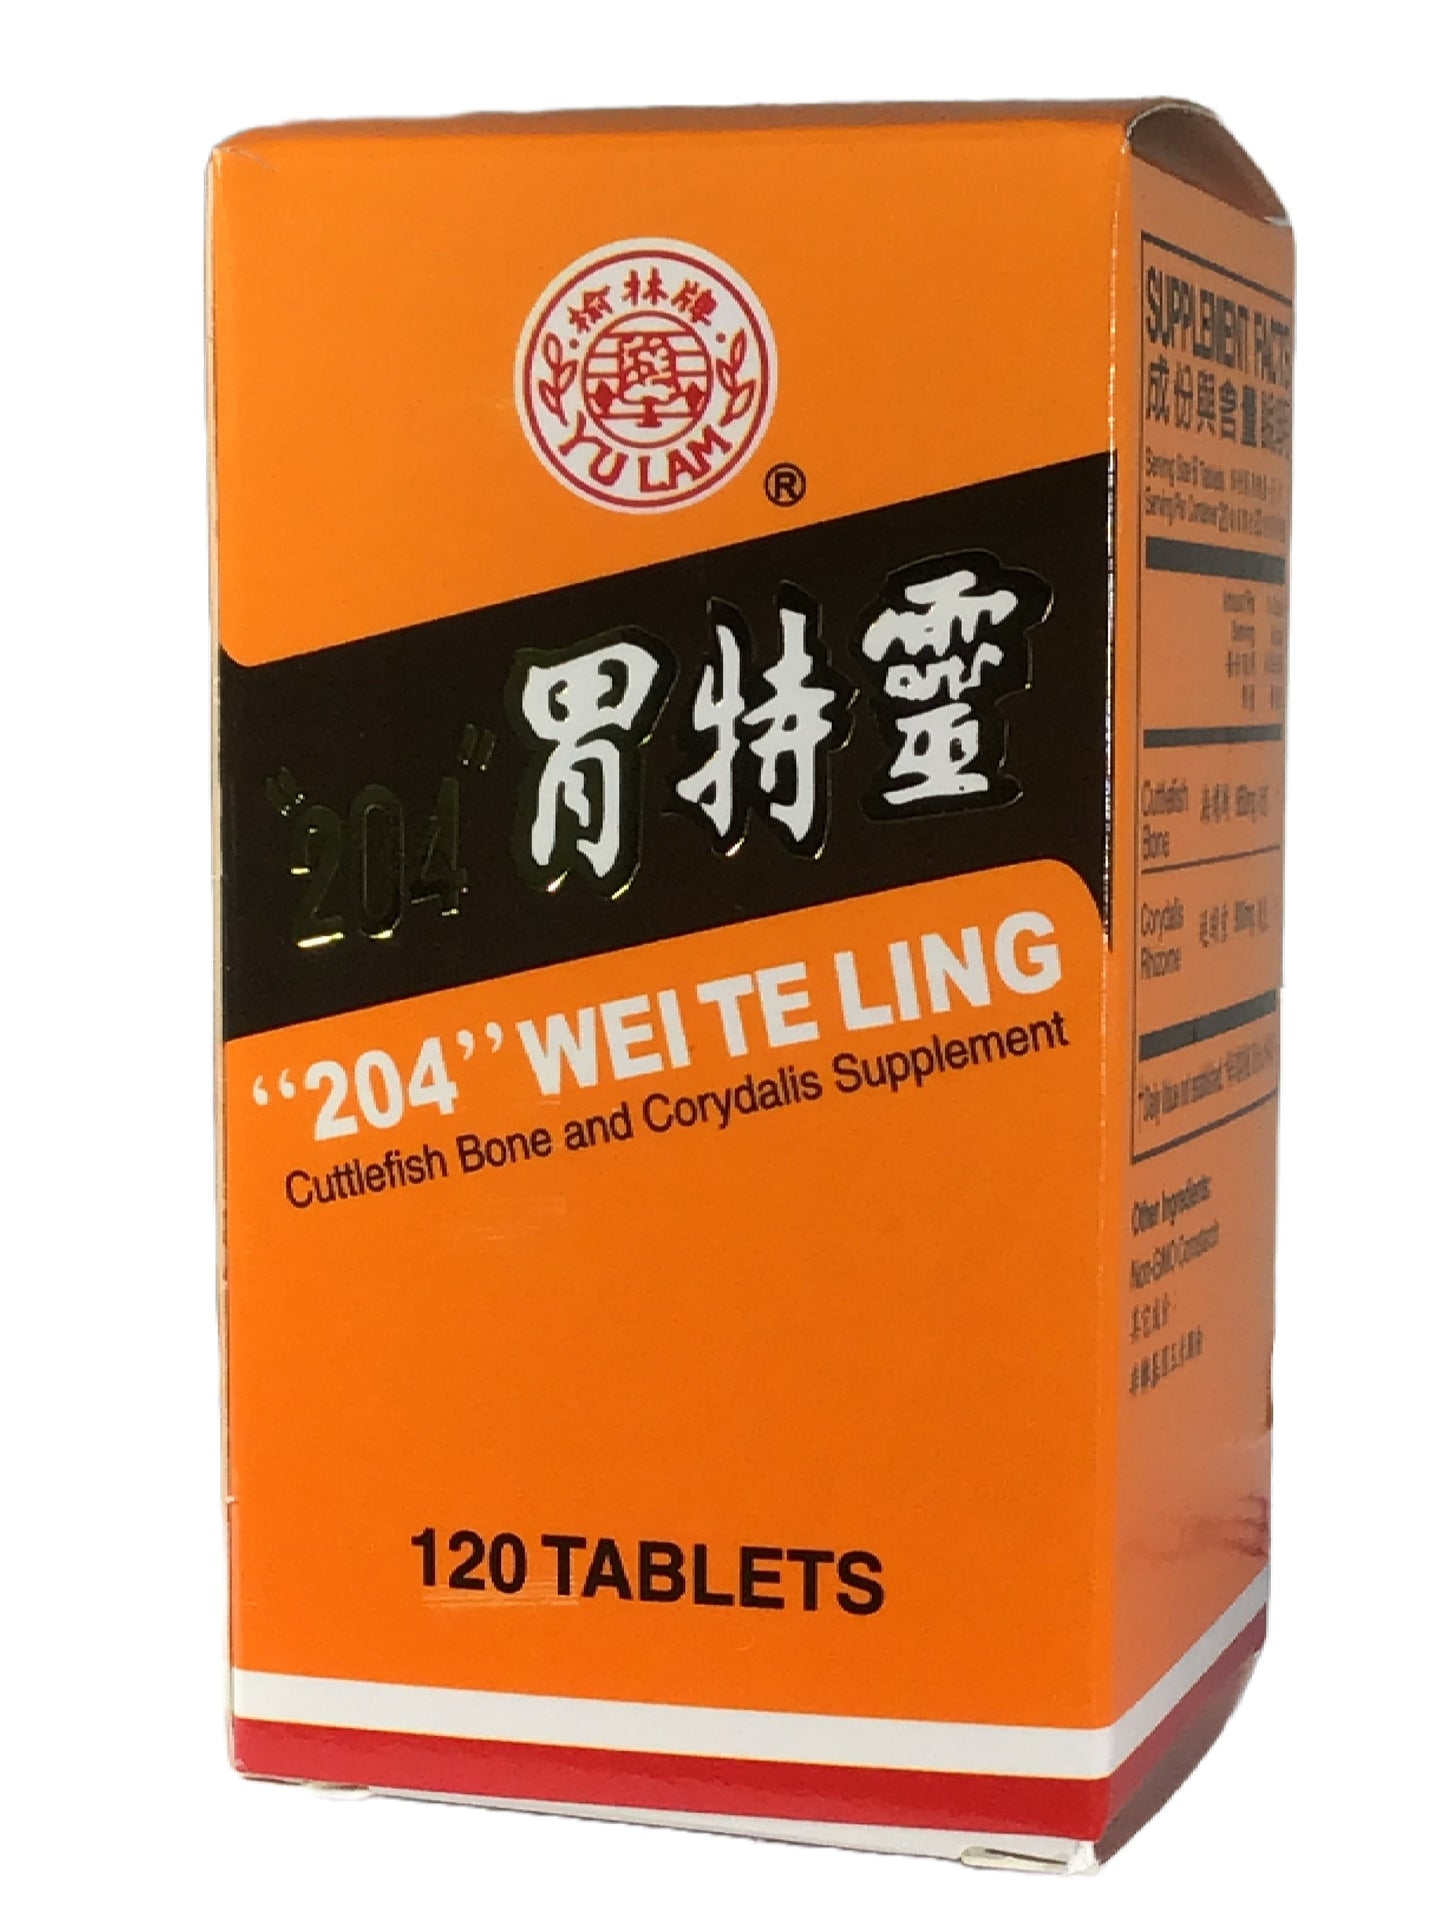 204 Wei Te Ling 榆林牌 胃特灵 120 Tablets